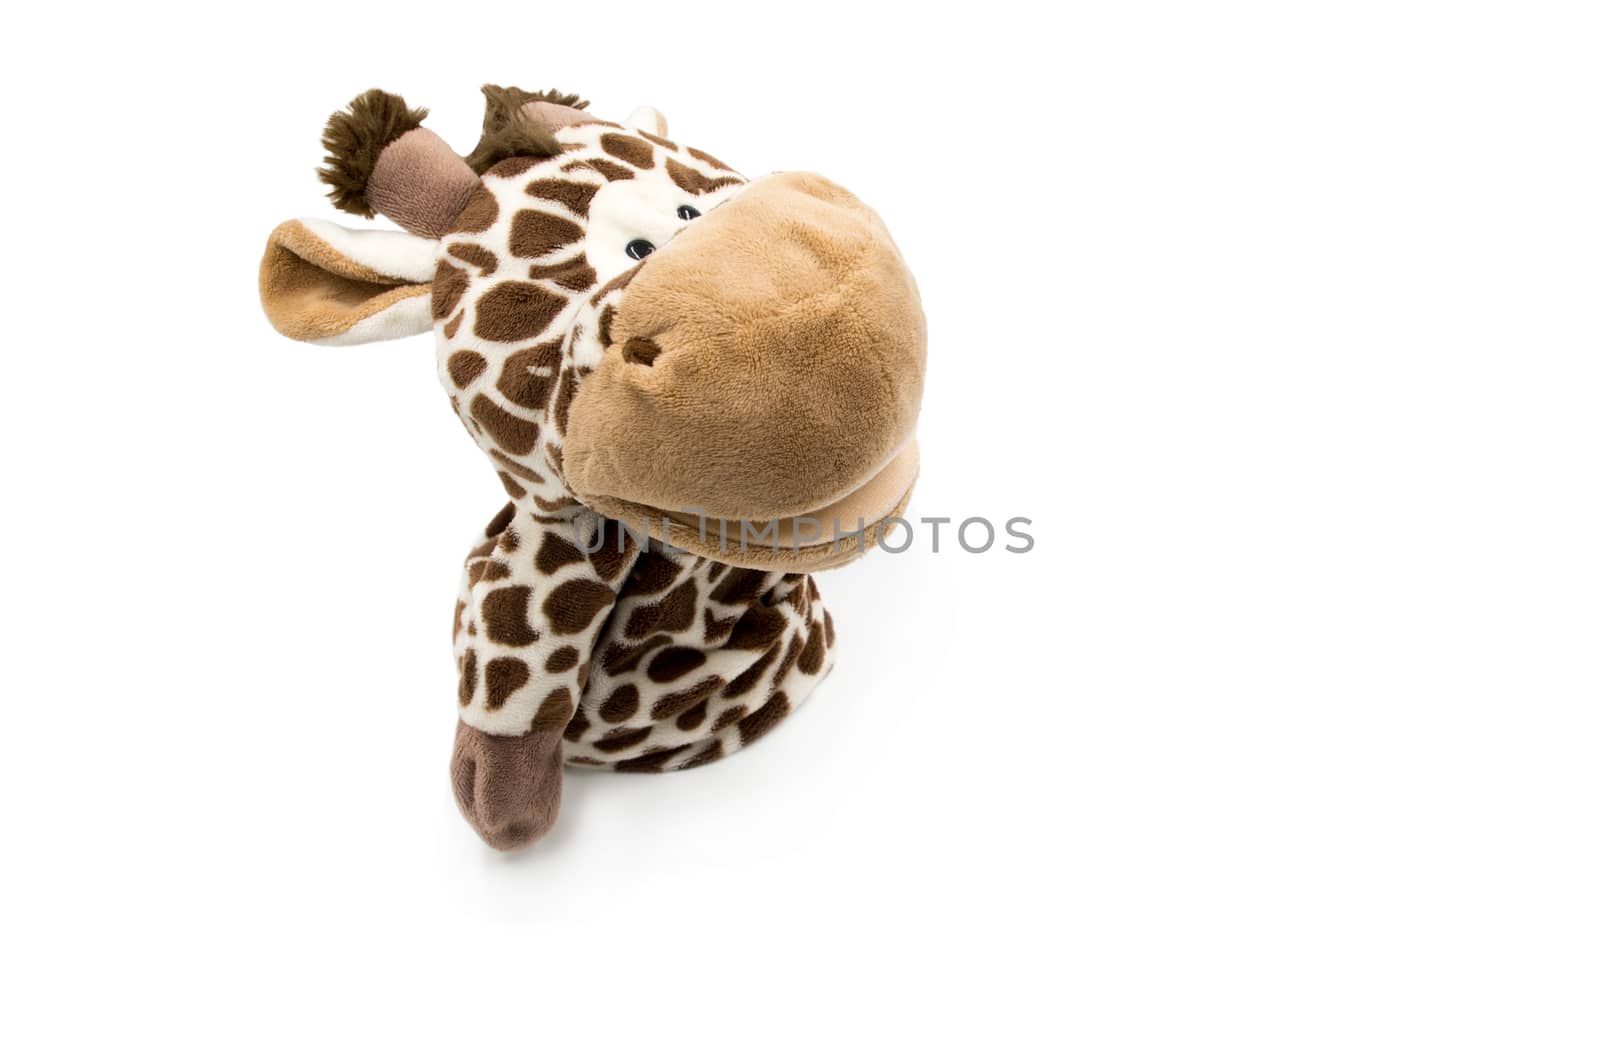 toy giraffe on the white background